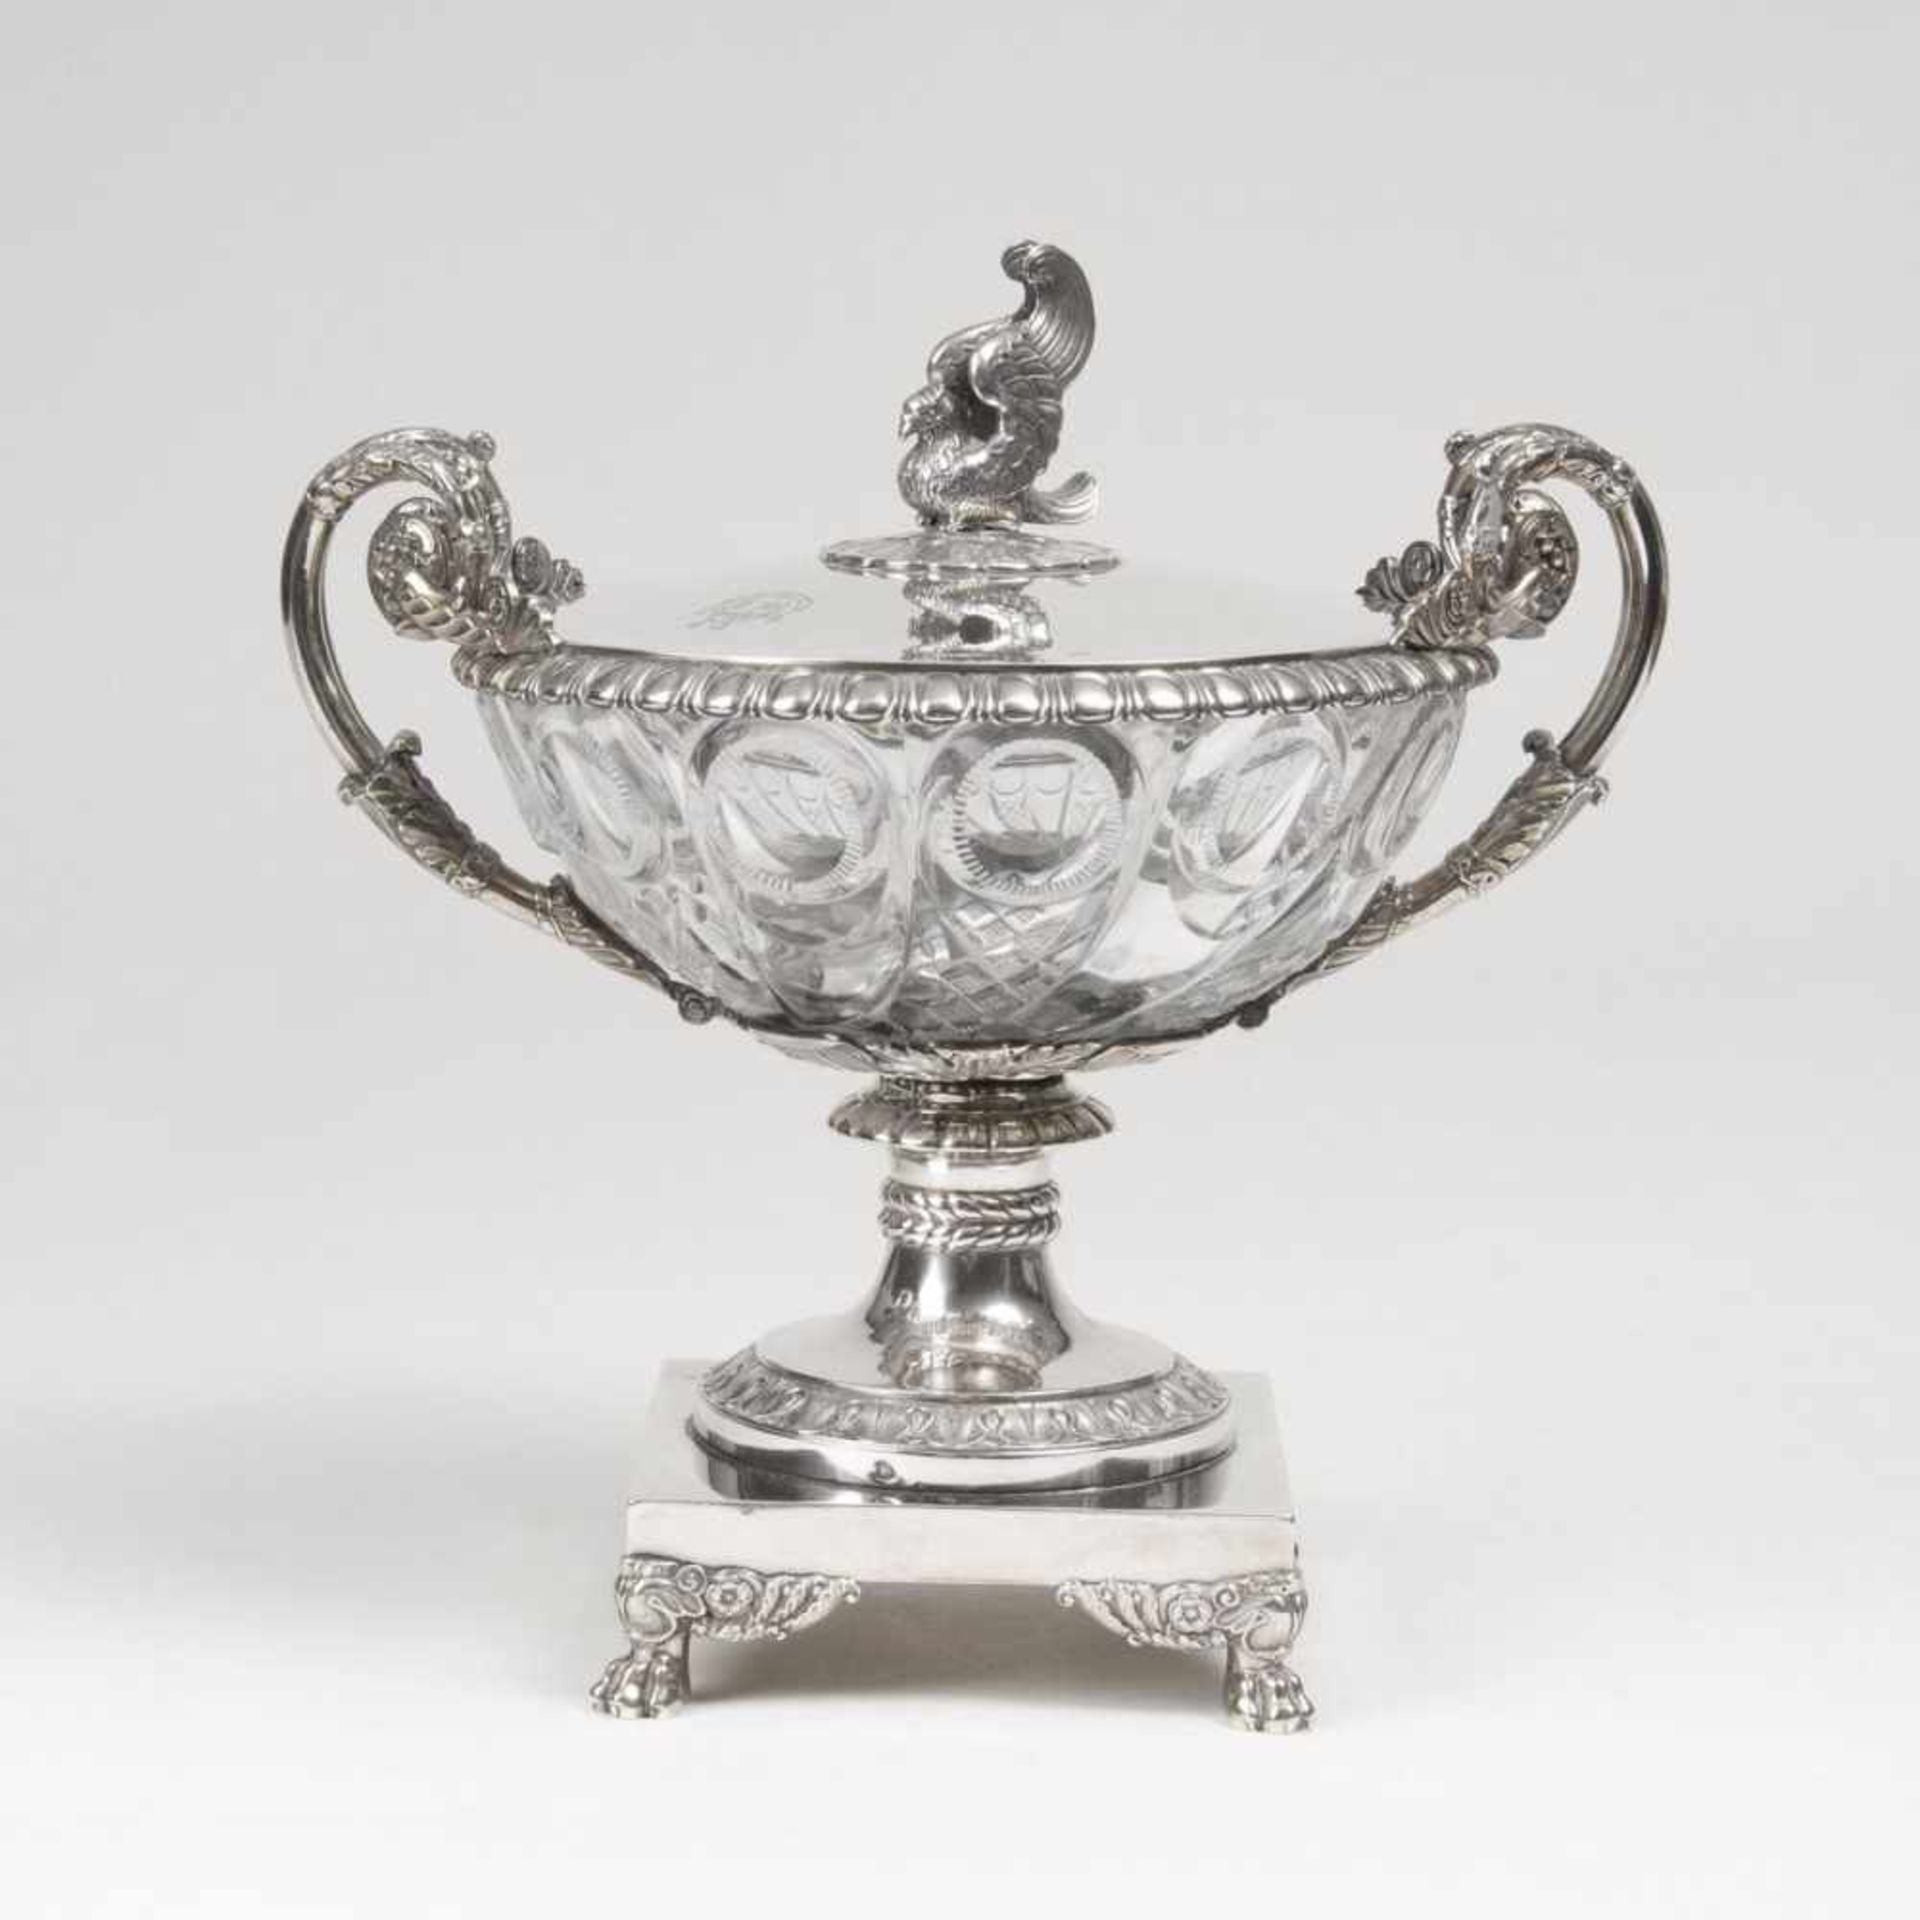 An extravagant French CentrepieceParis, around 1820/30. Silver, marked. Assaymark: guarantee- and